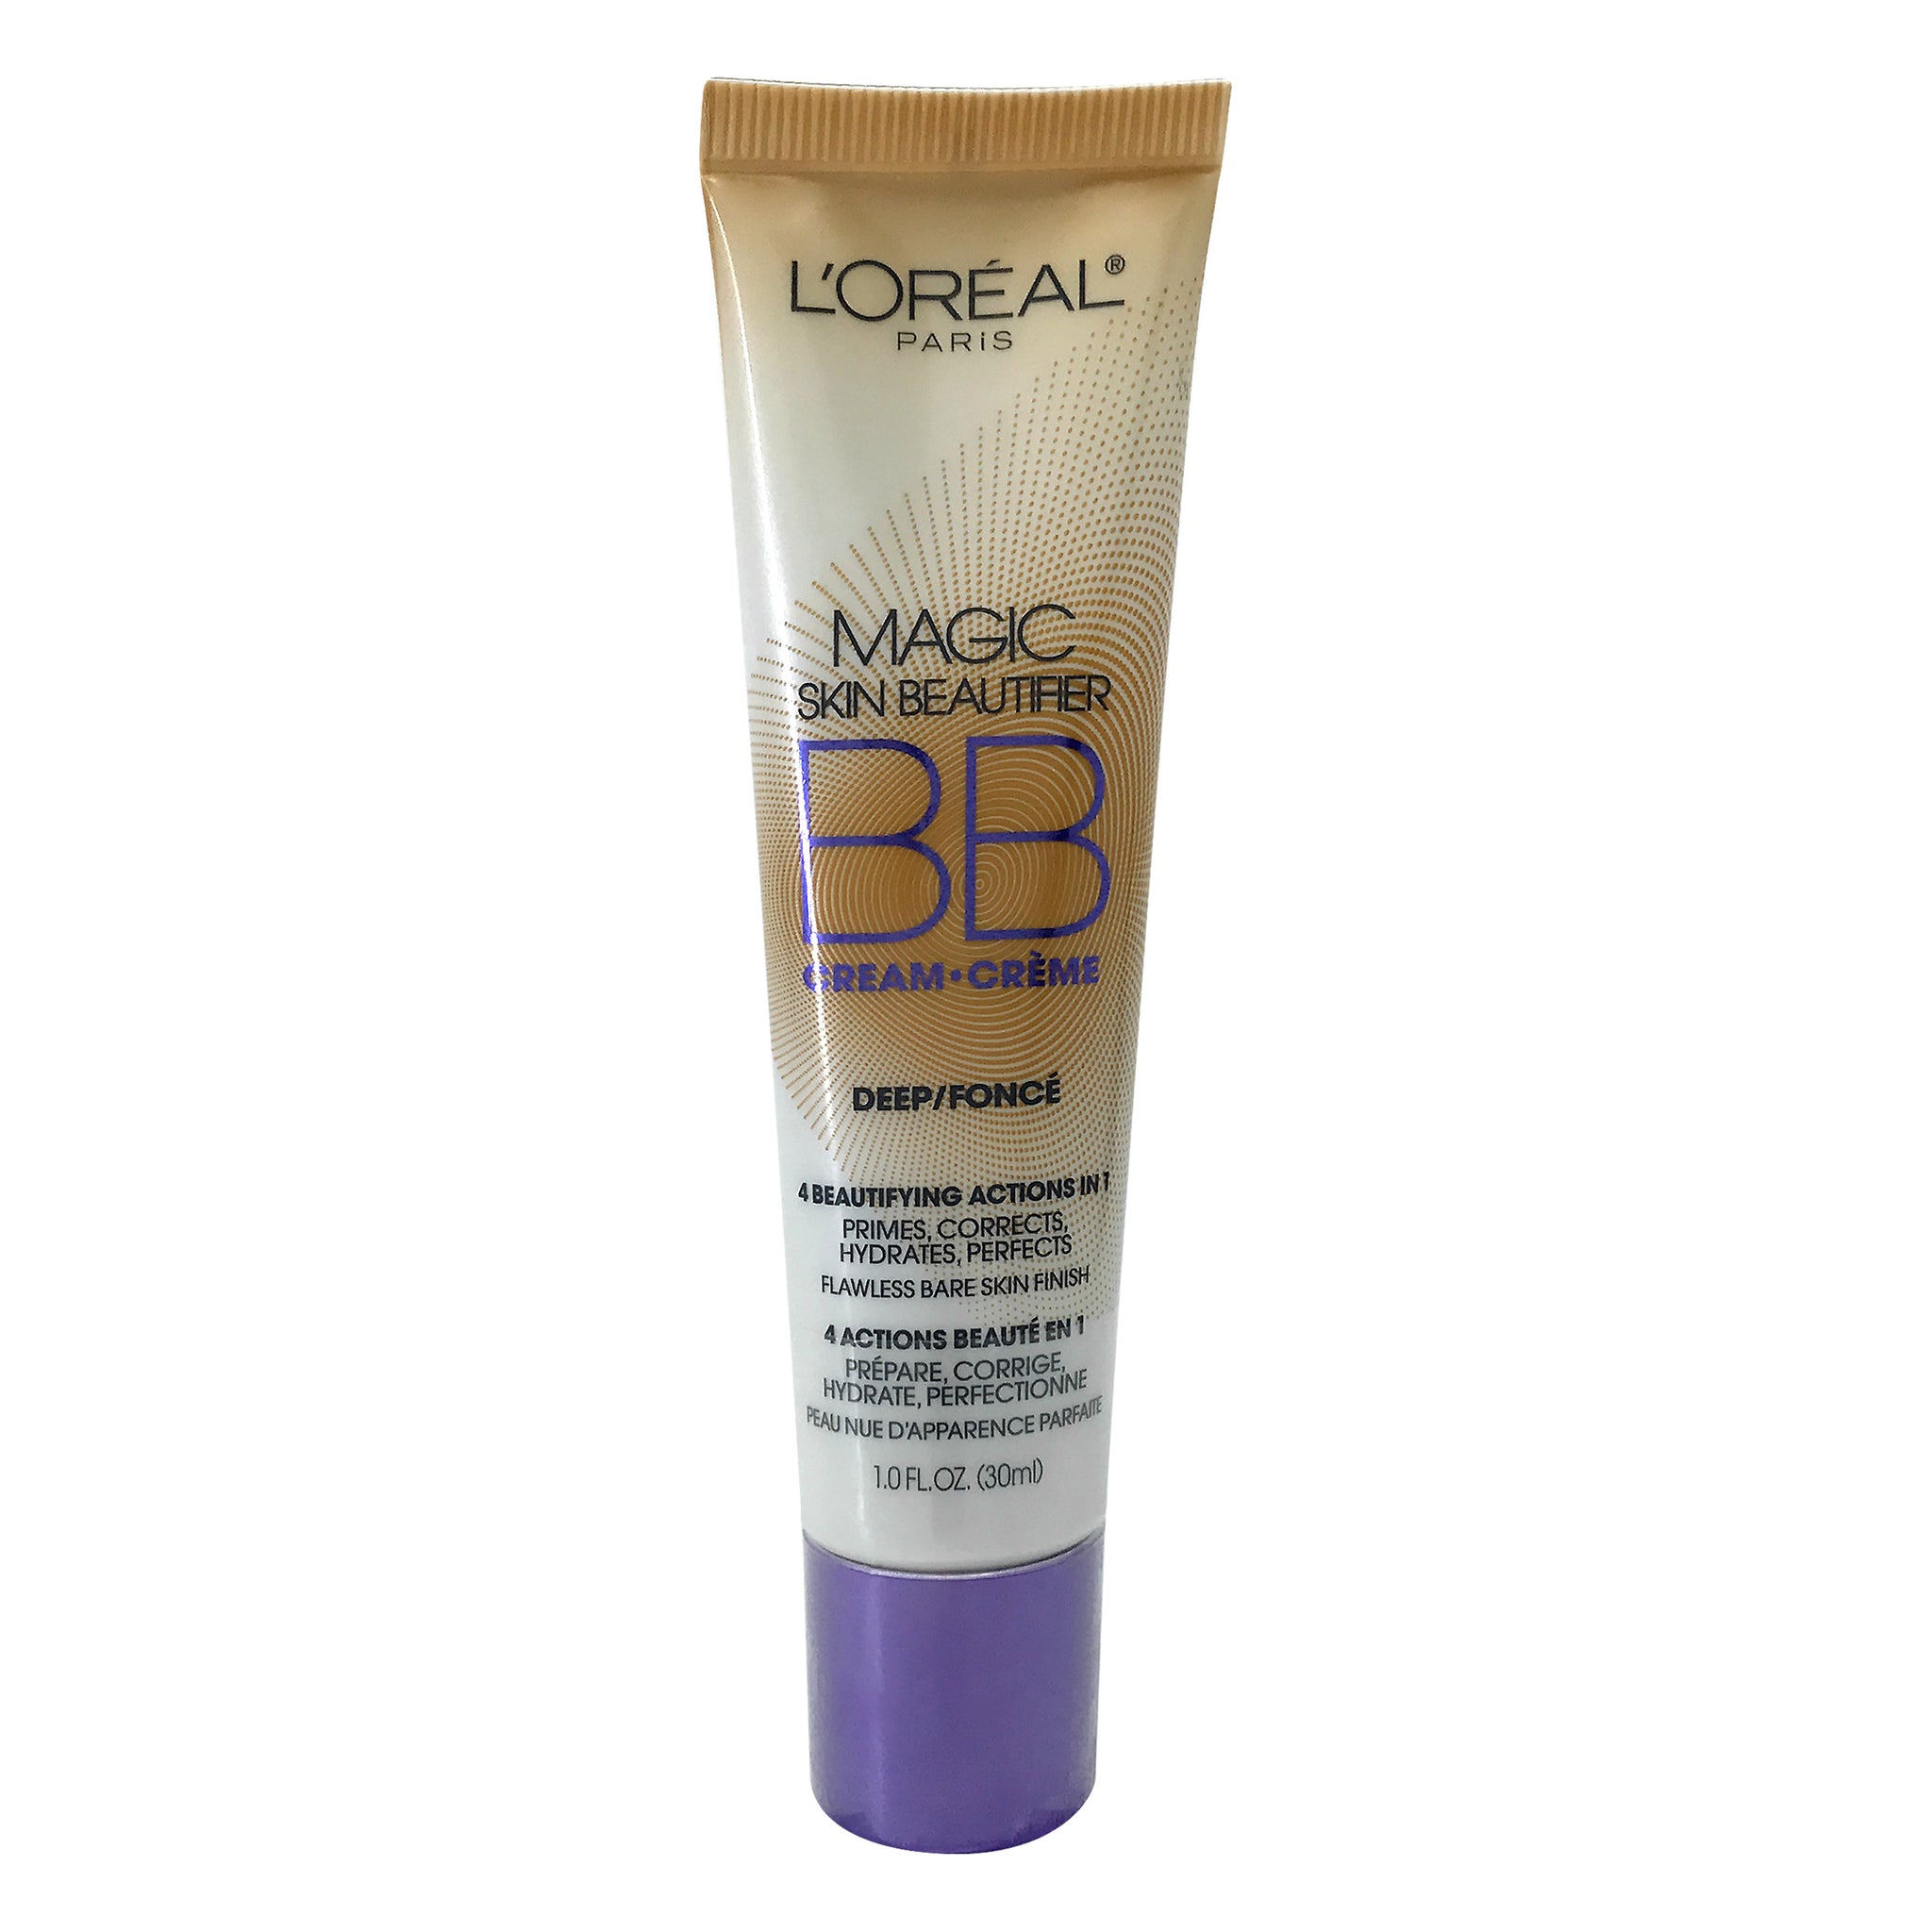 Magic Skin Beautifier BB Cream